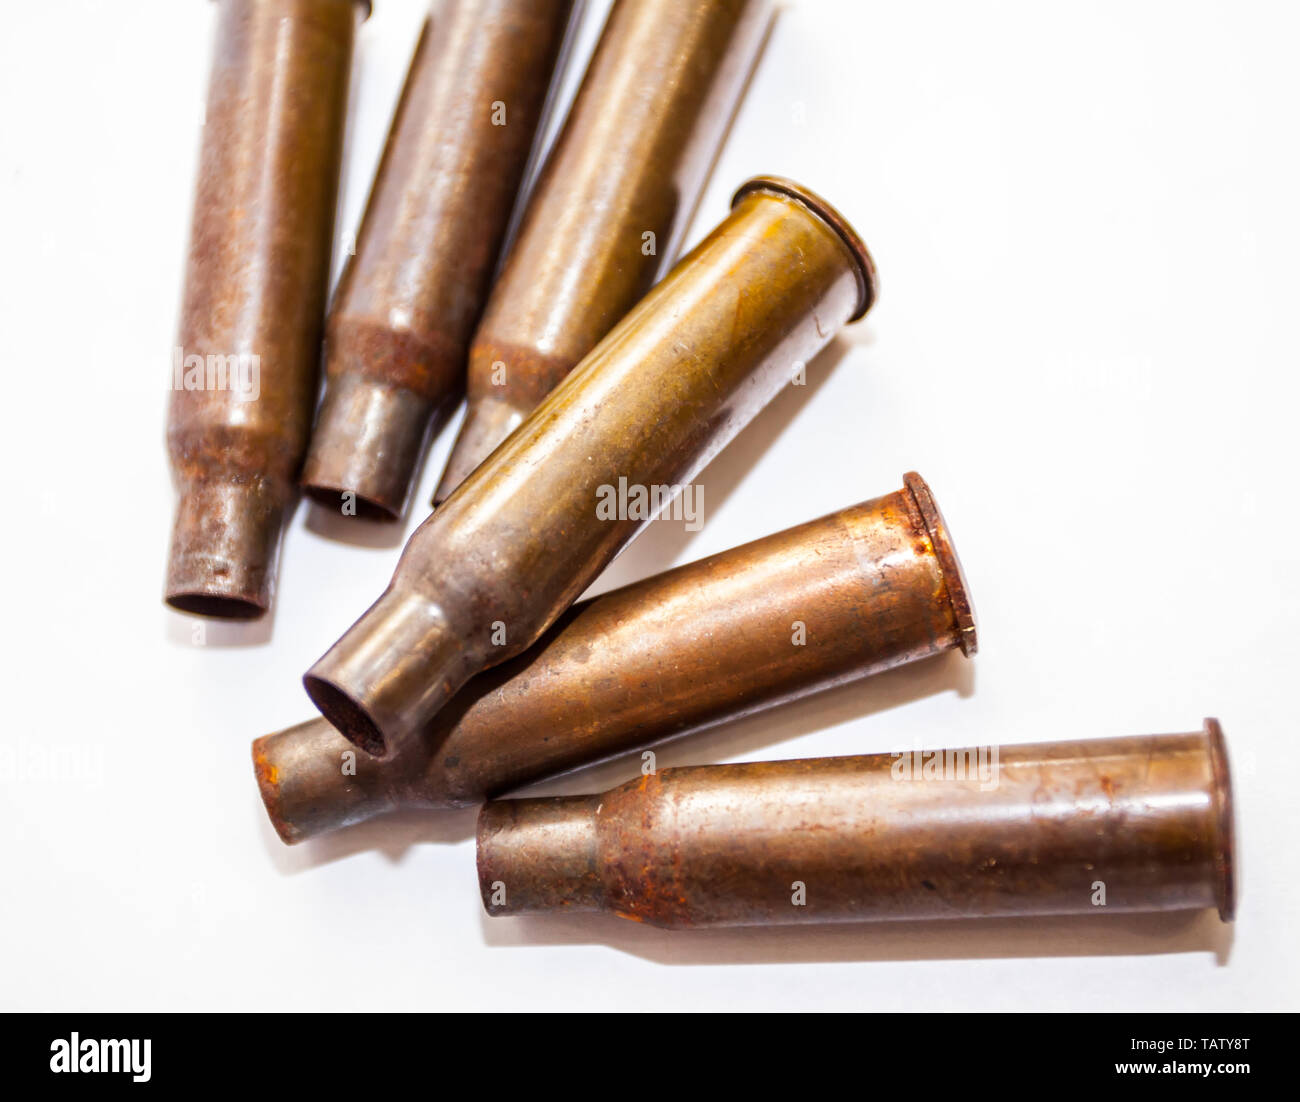 Empty bullet shells on a white background Stock Photo - Alamy